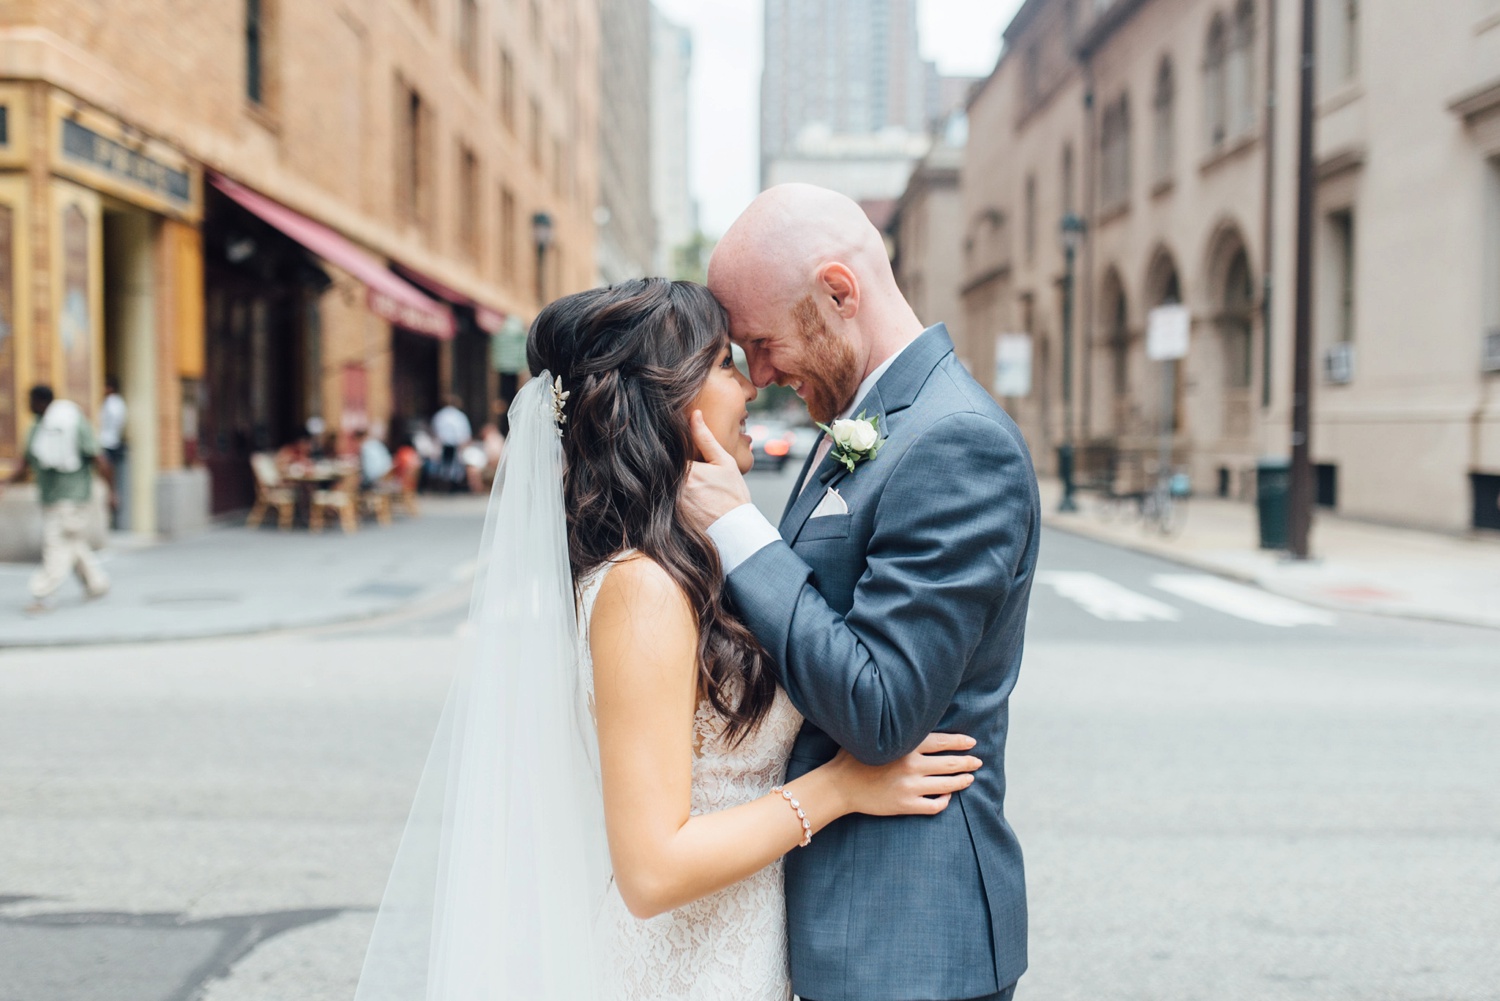 Meifung + David - Tenth Presbyterian Church - Rittenhouse Square Philadelphia Wedding - Alison Dunn Photography photo